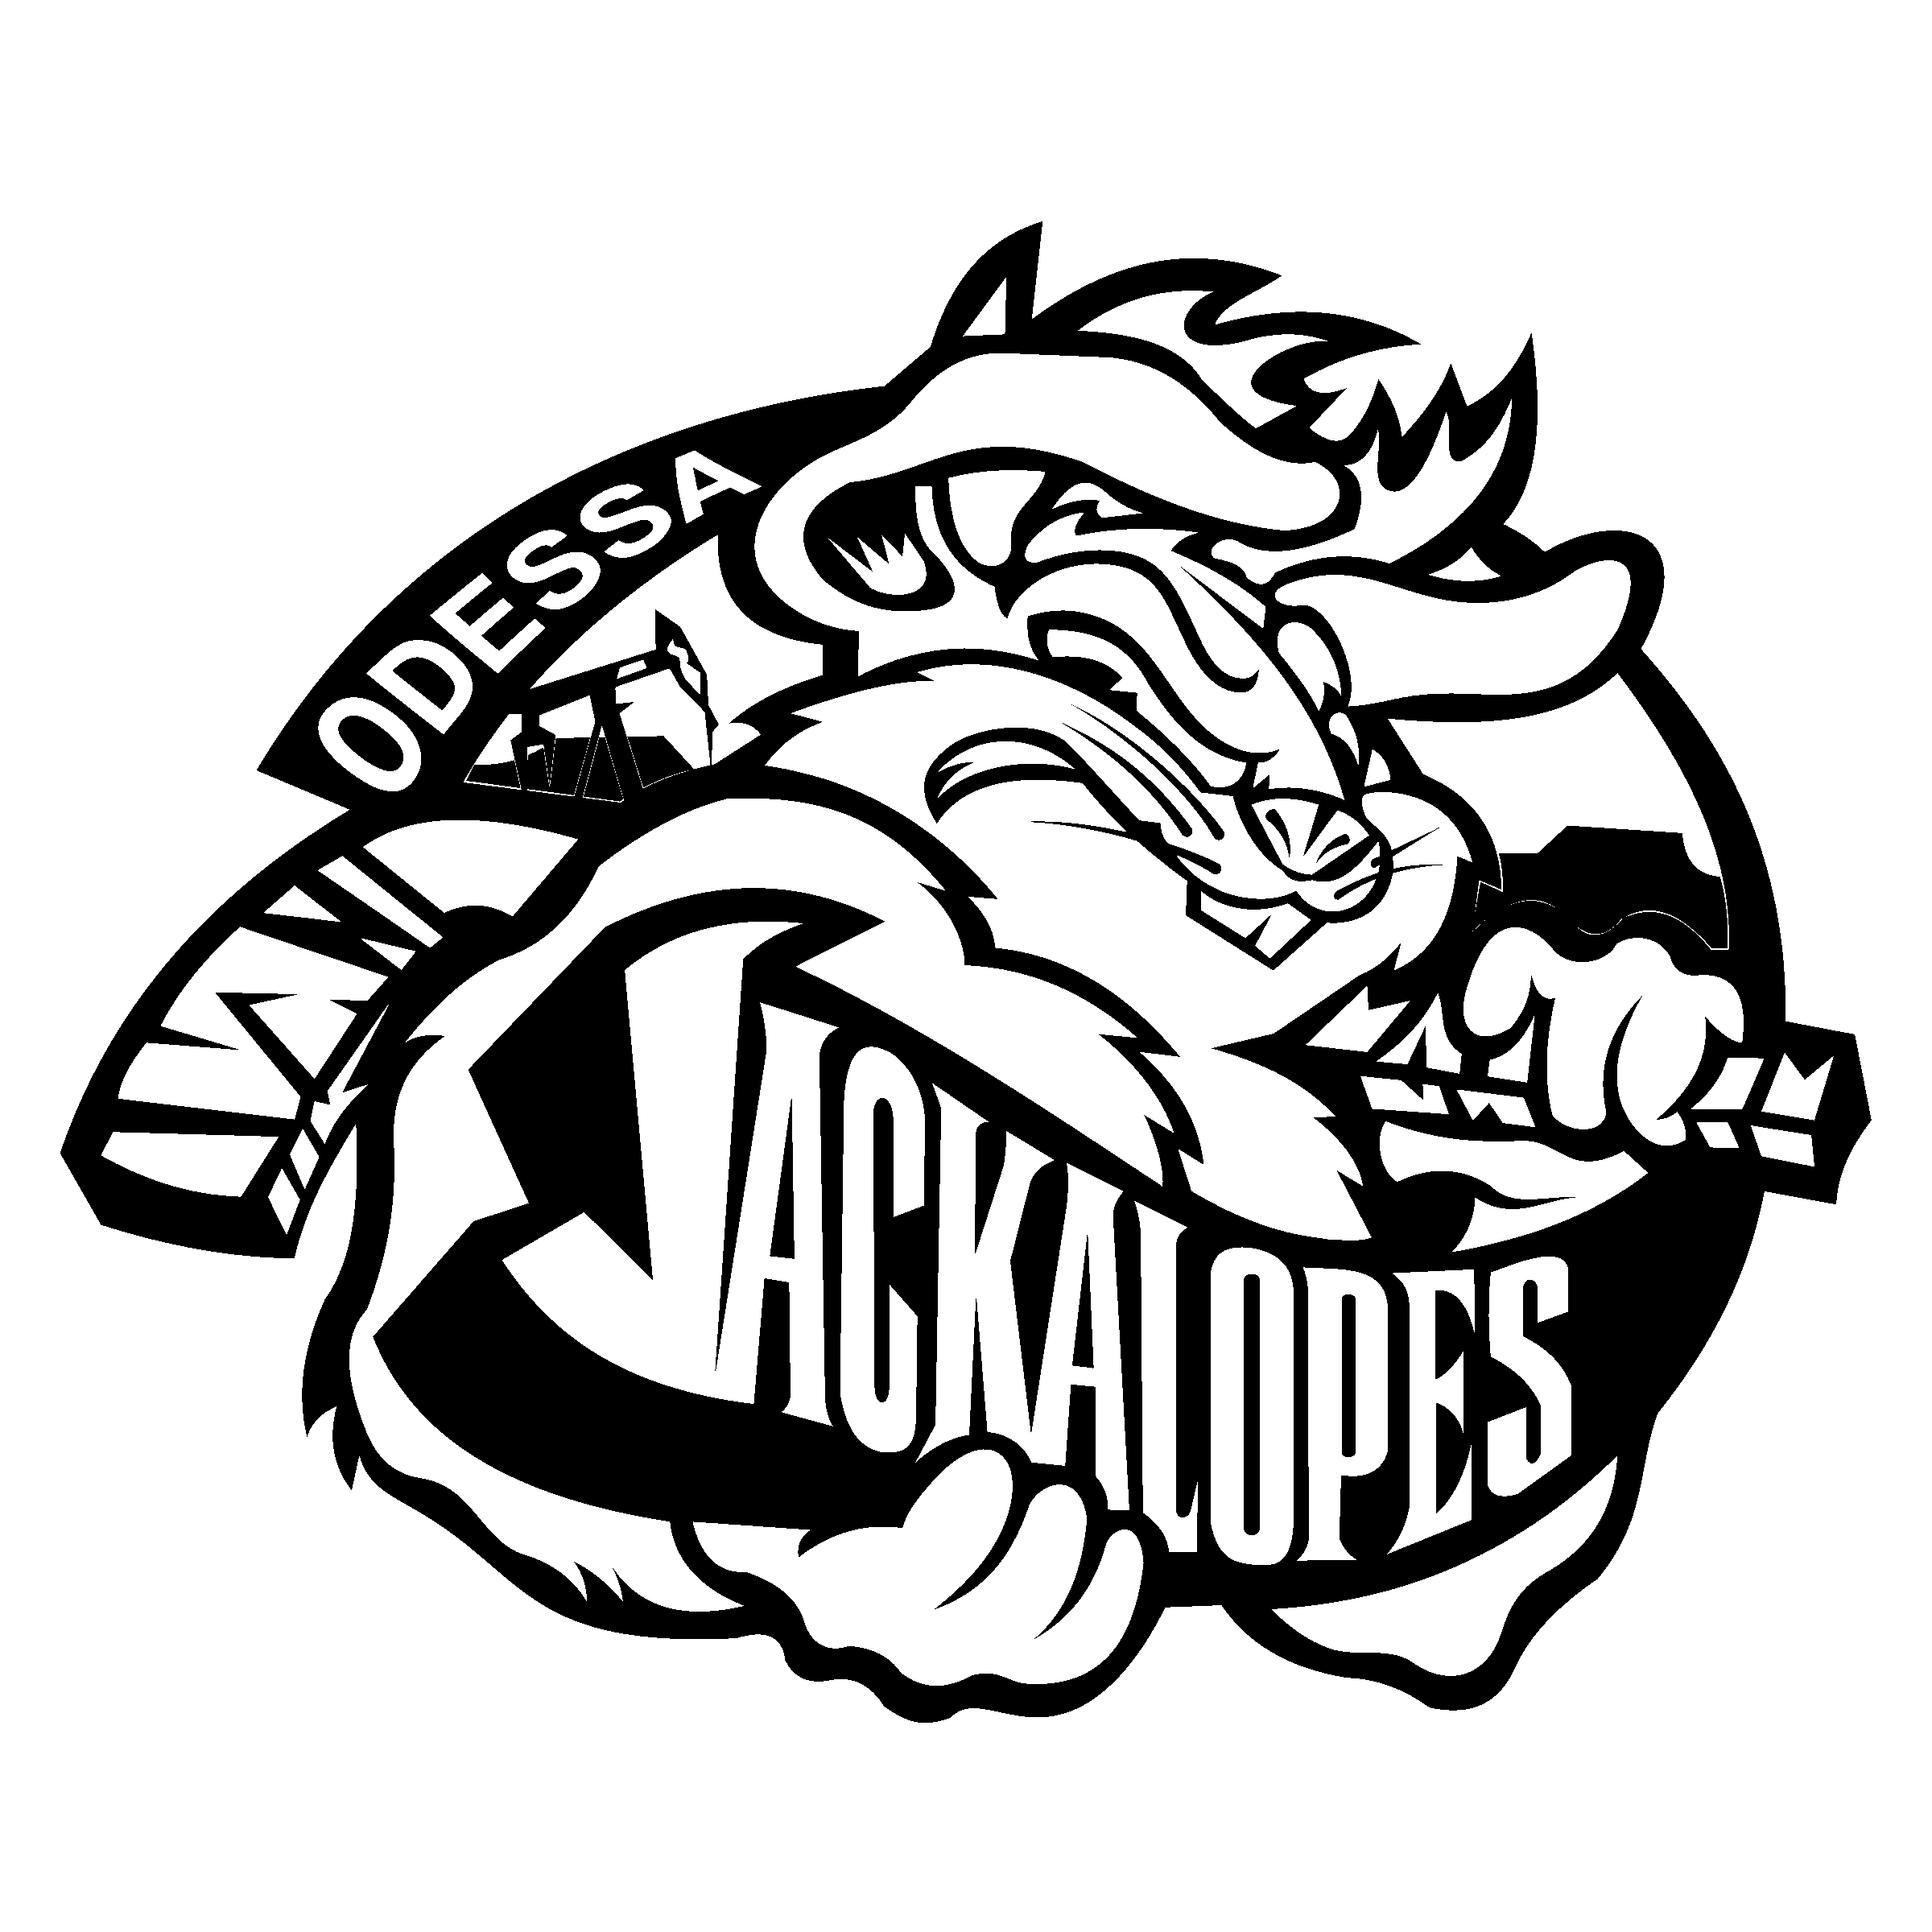 Odessa Jackalopes Logo - Odessa Jackalopes Logo PNG Transparent & SVG Vector - Freebie Supply